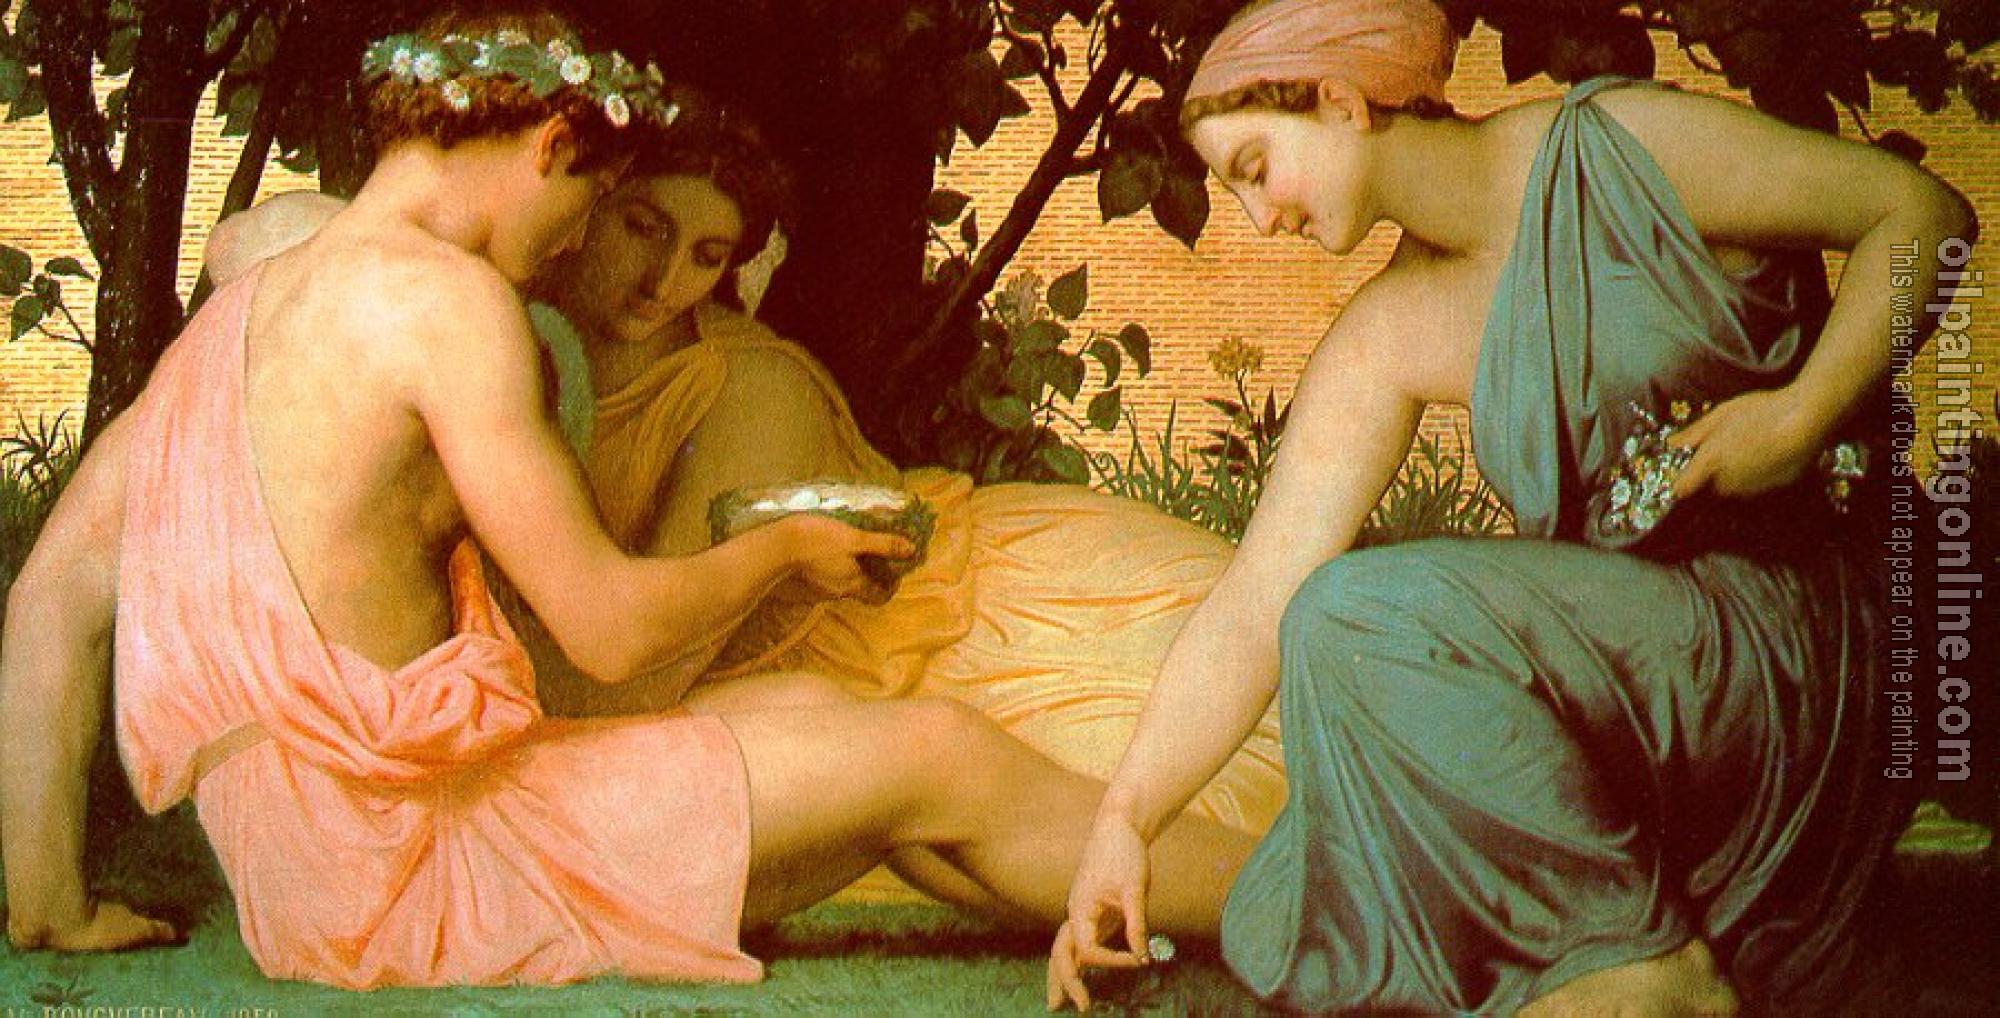 Bouguereau, William-Adolphe - Spring